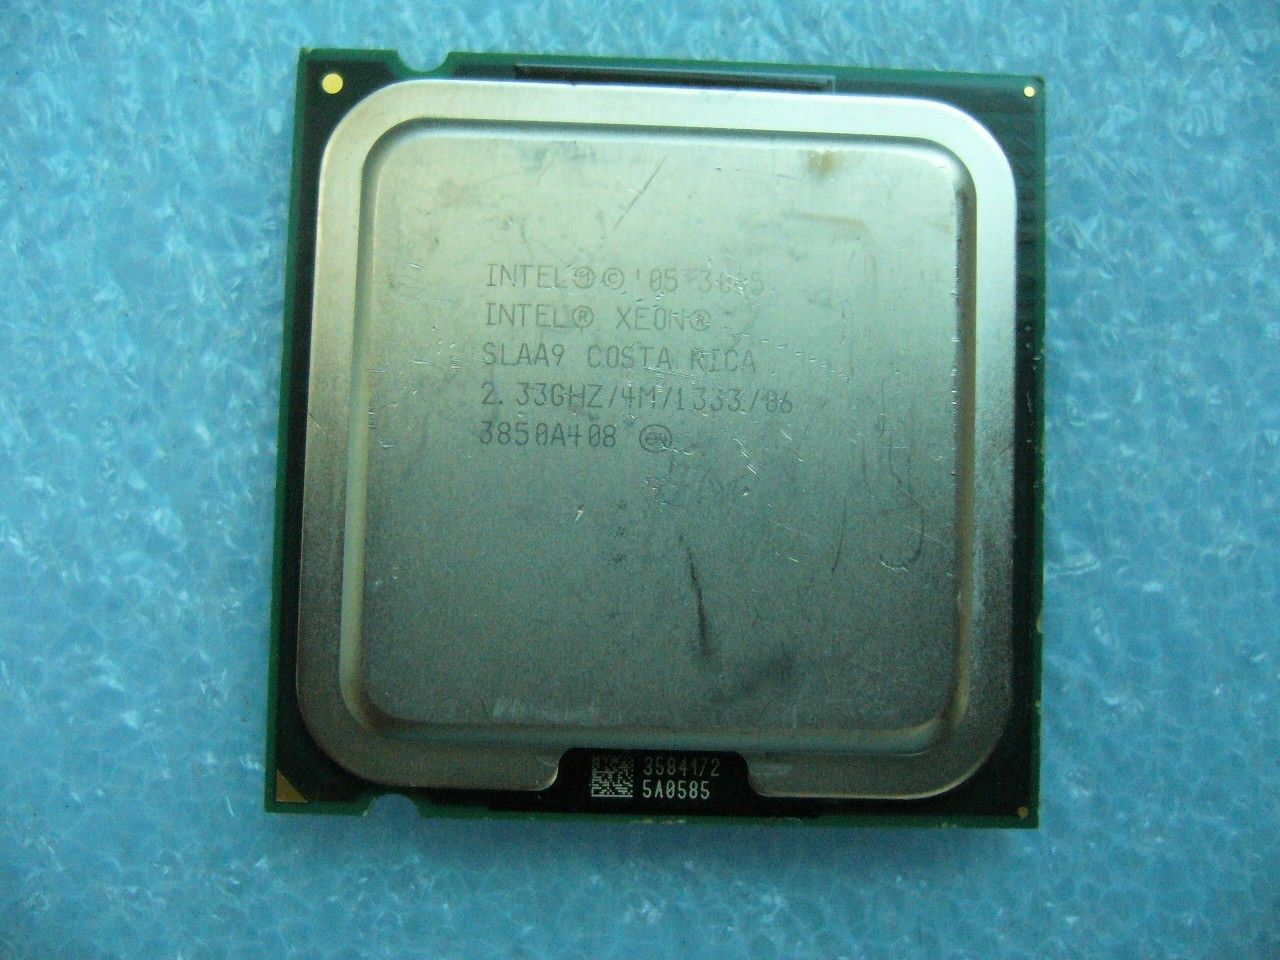 QTY 1x INTEL Dual Cores Xeon 3065 CPU 2.33GHz 4MB/1333Mhz LGA775 SLAA9 - Click Image to Close